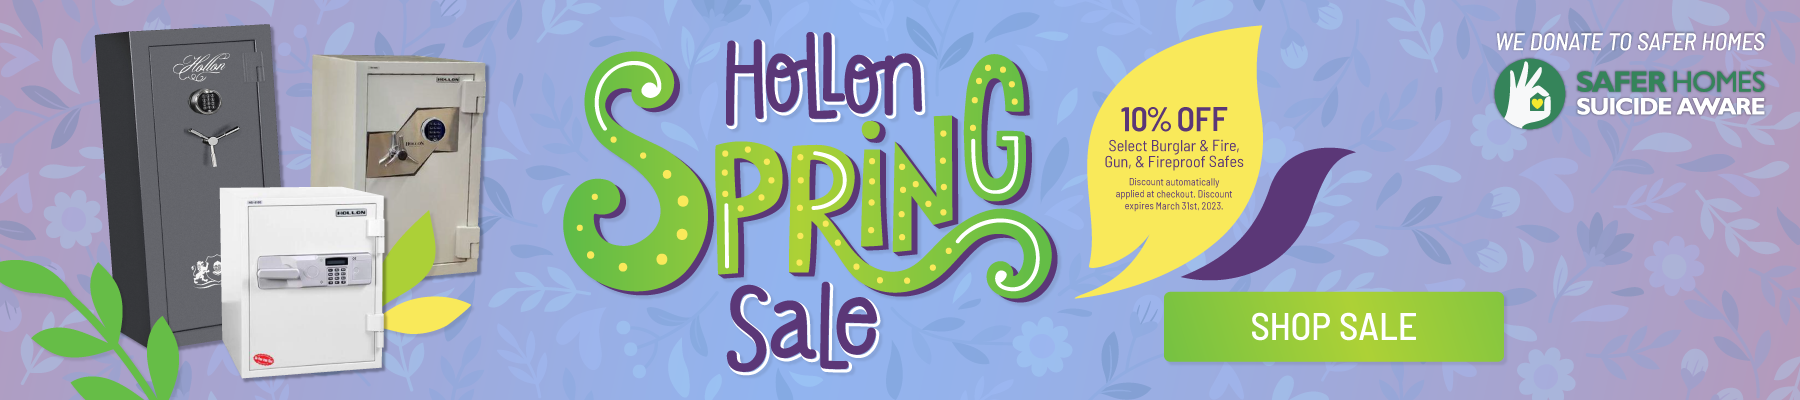 Hollon Spring Sale